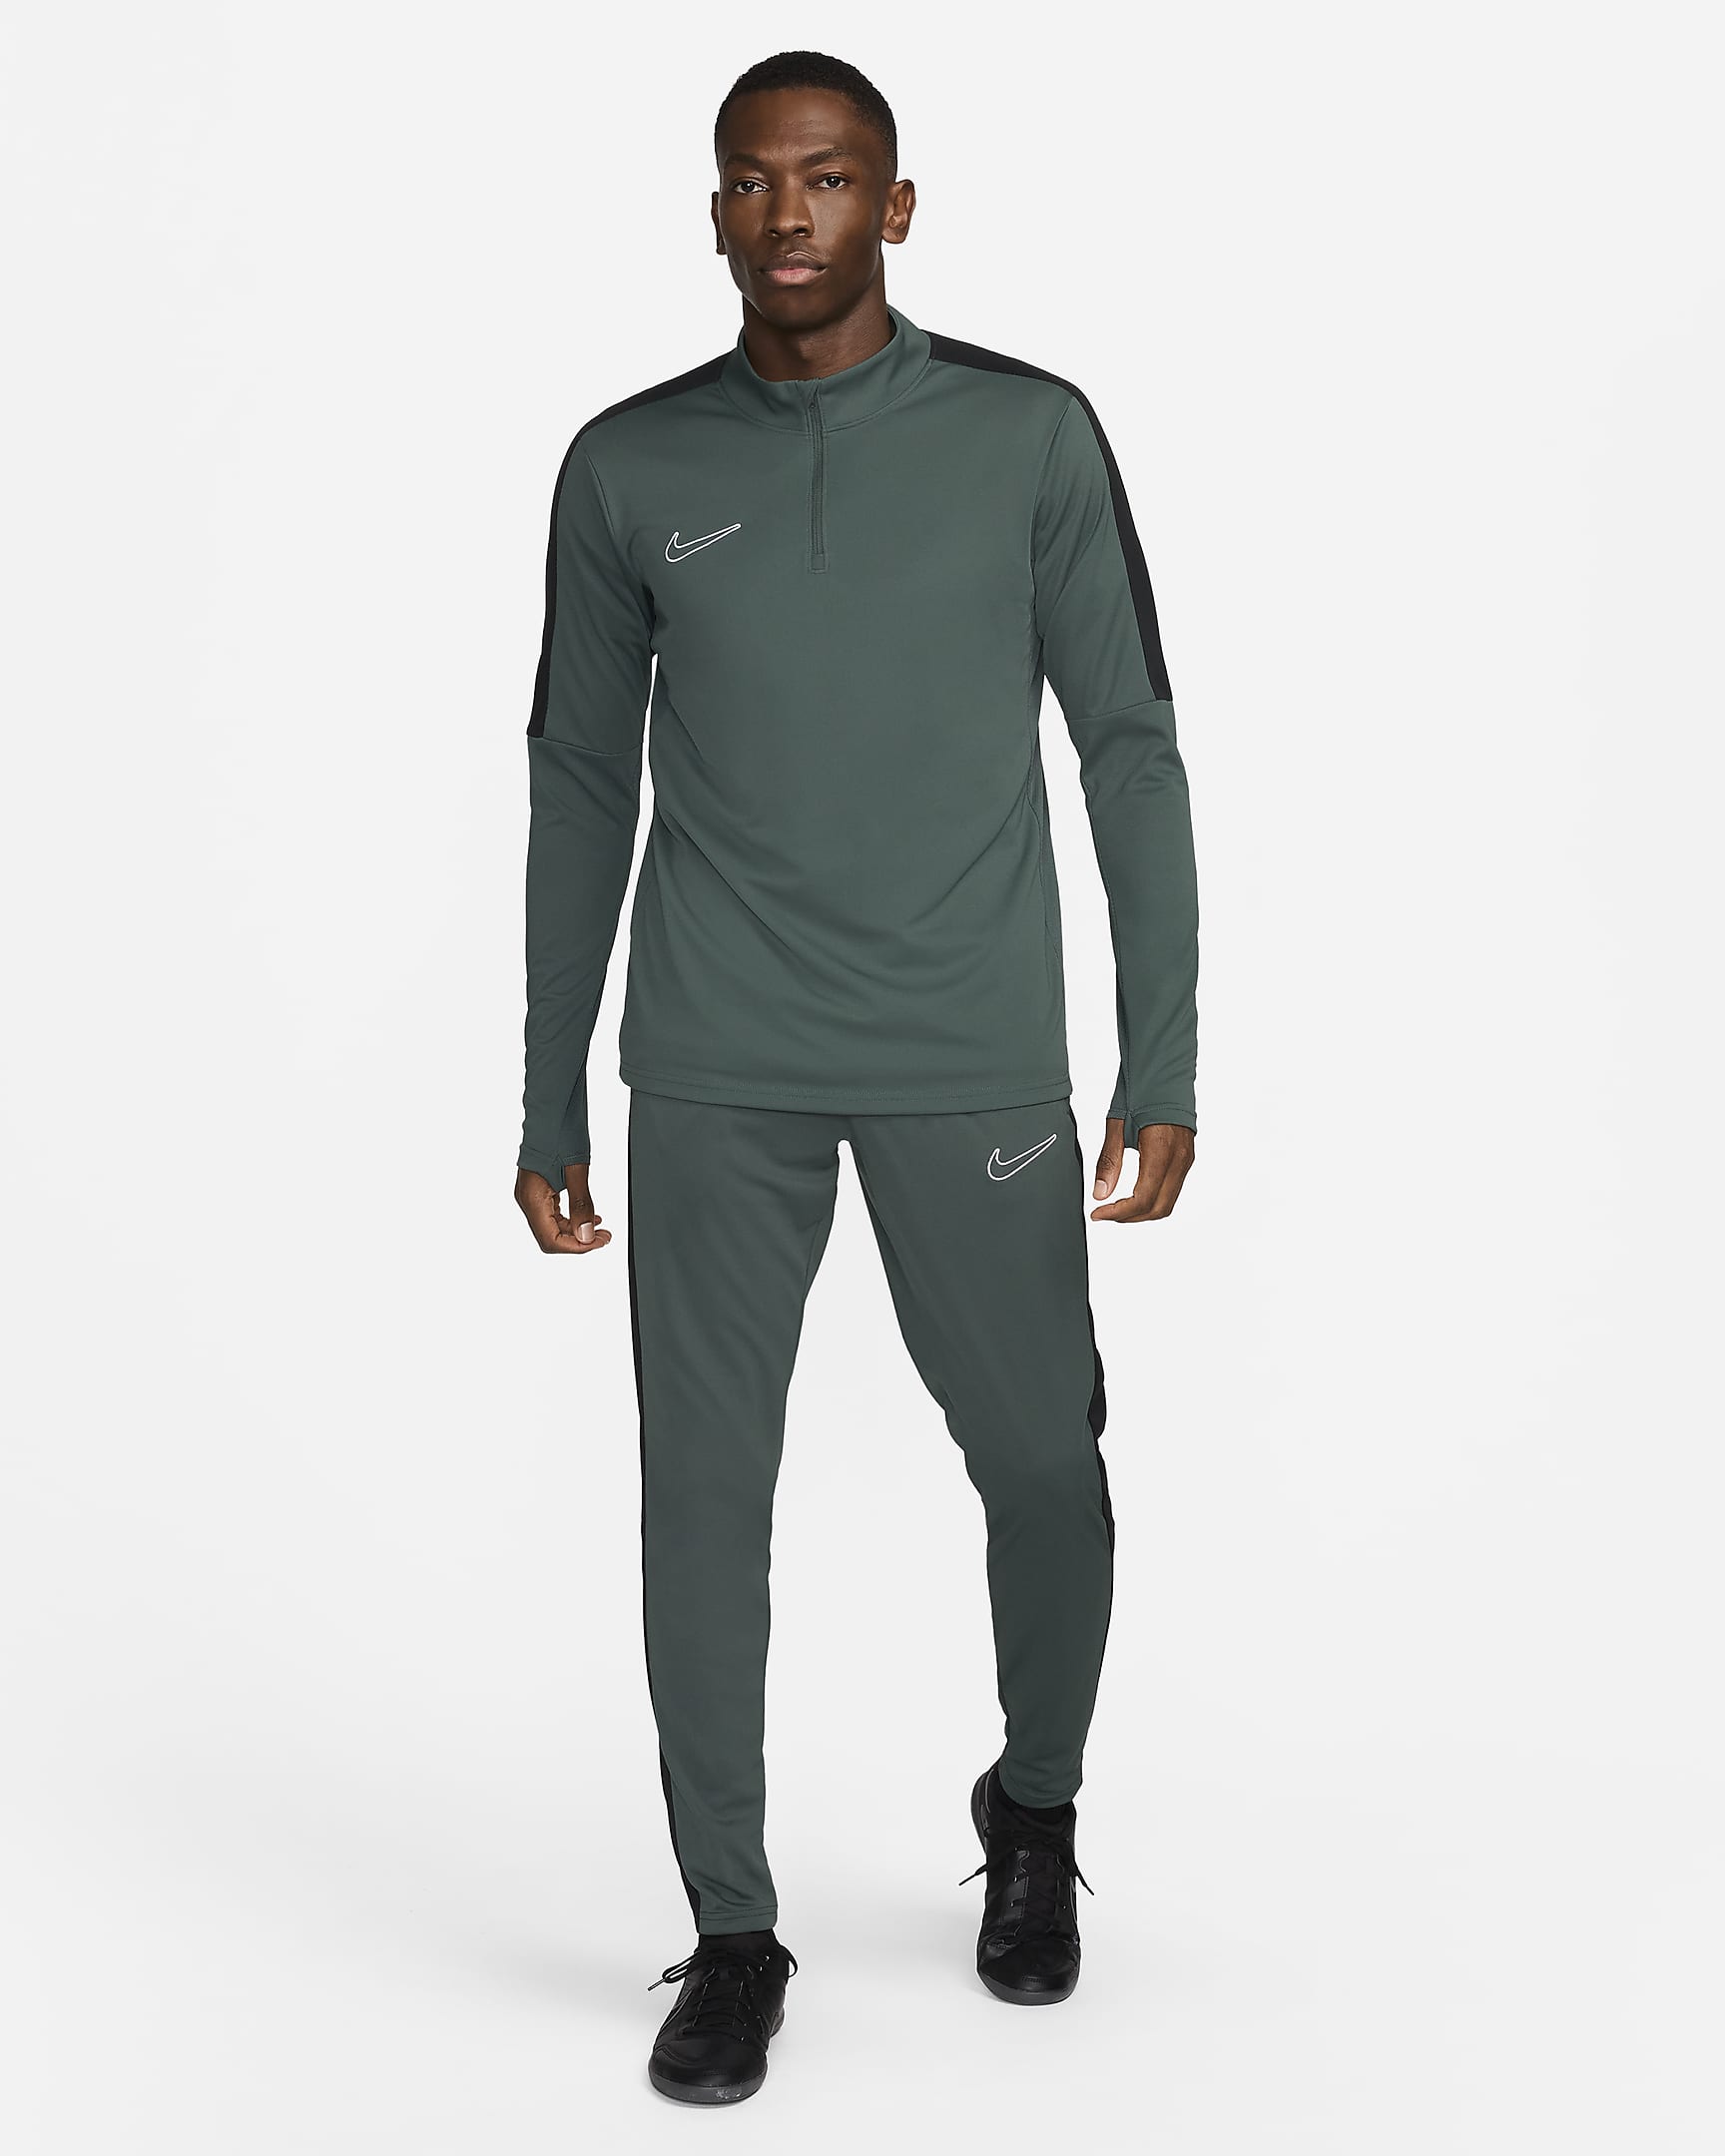 Nike Dri-FIT Academy Men's Dri-FIT Football Pants - Vintage Green/Black/Black/White